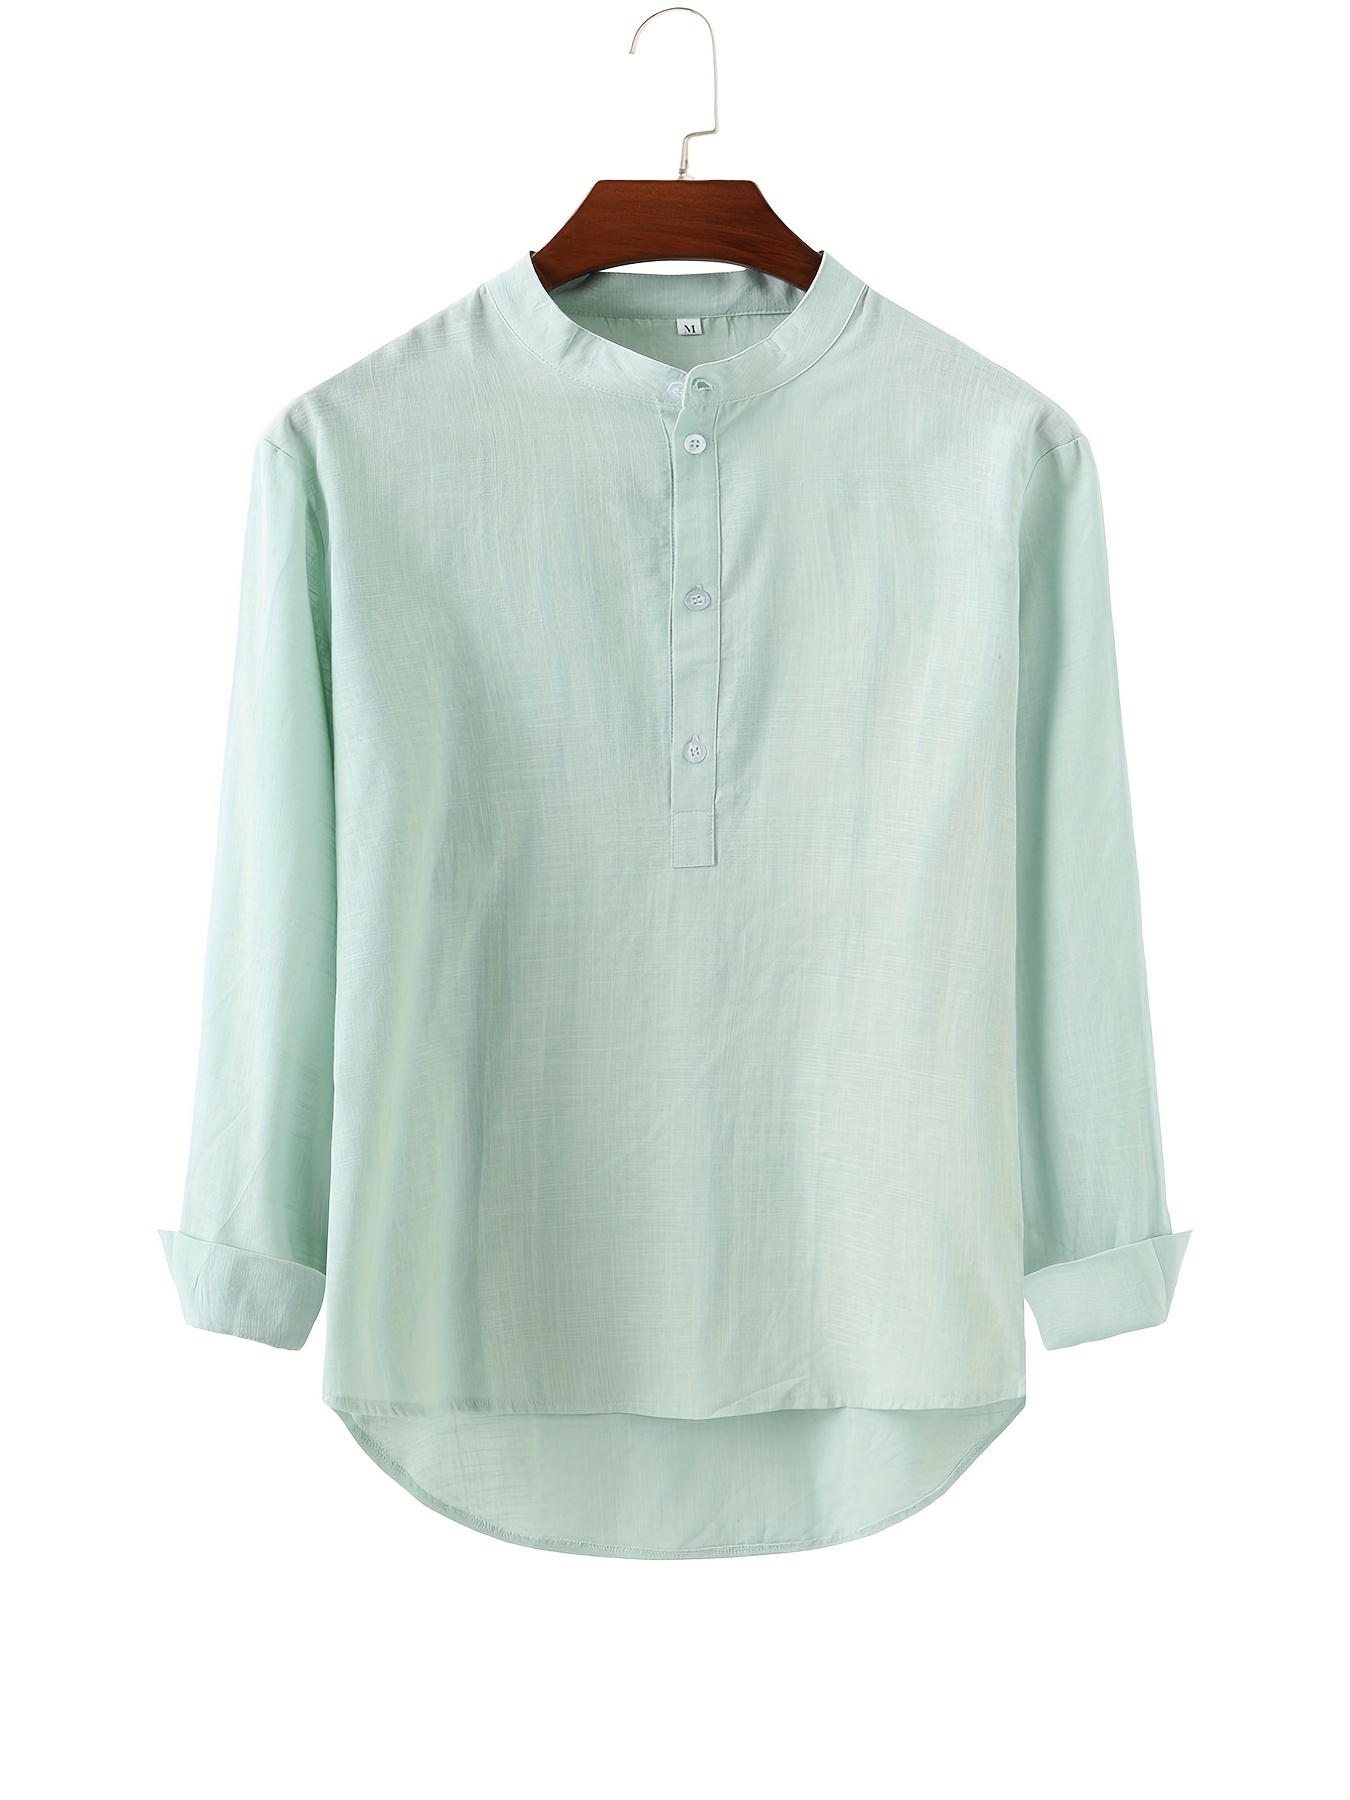 Boat neck comfy blouse, Buy Mens & Kids Innerwear